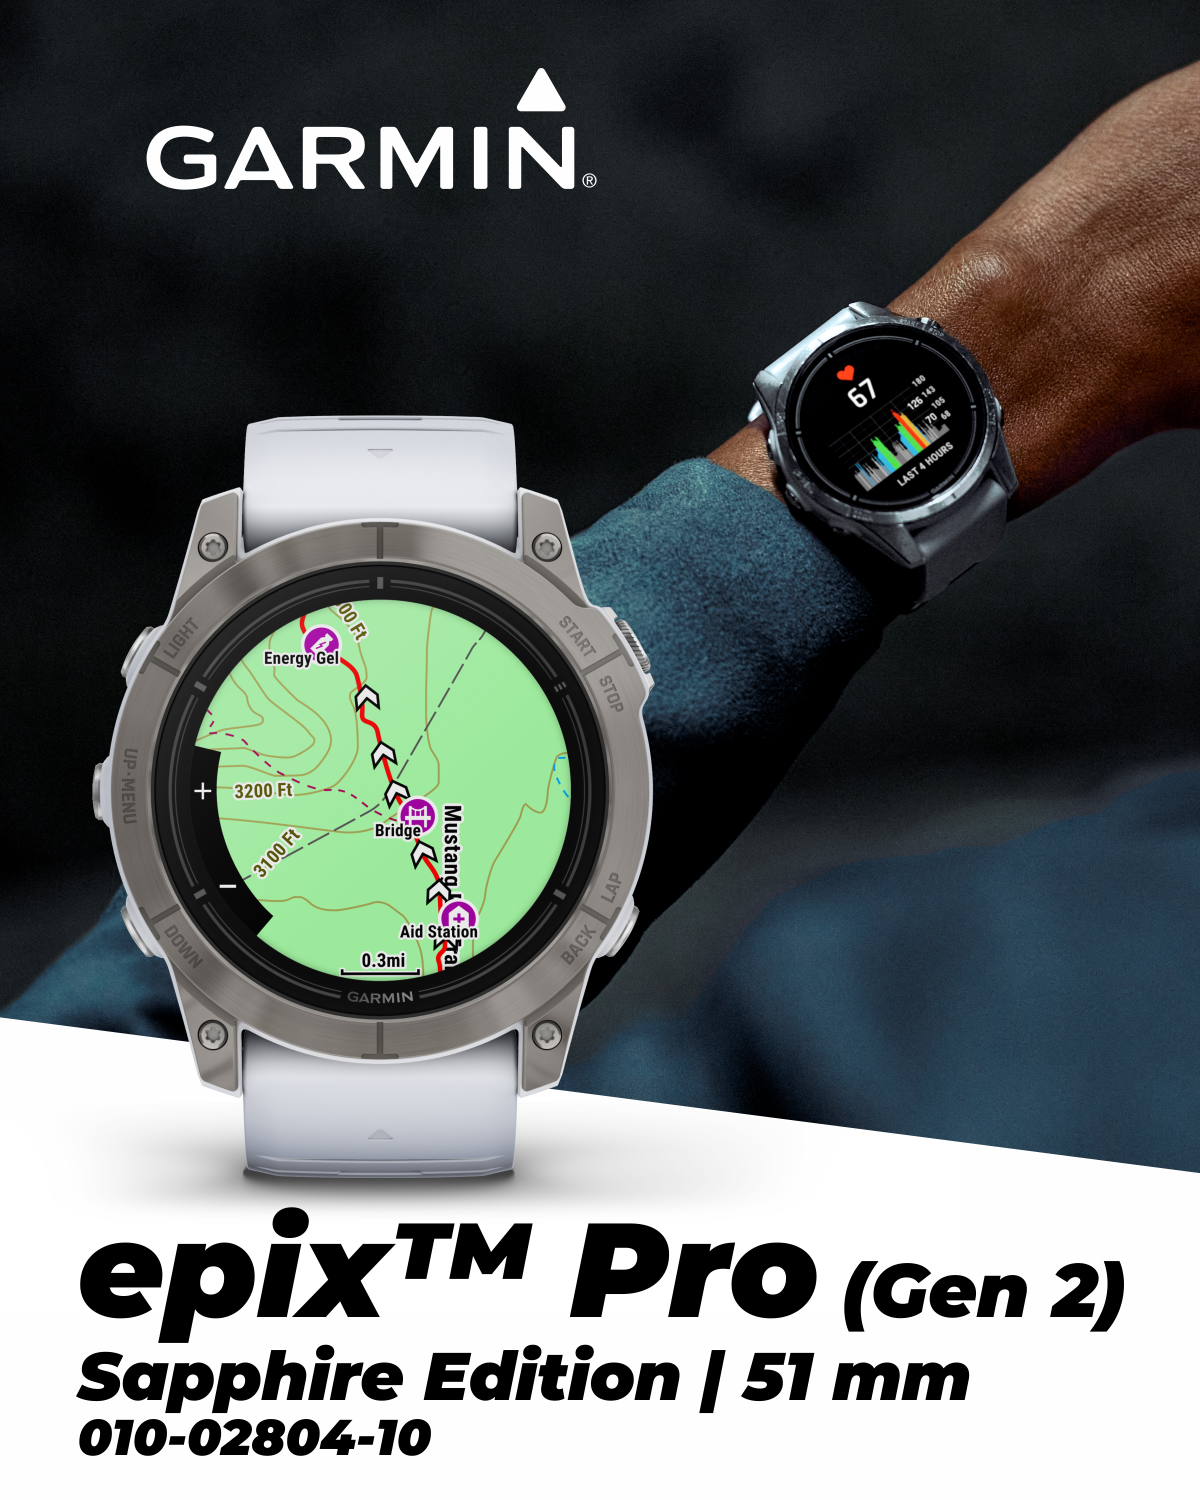 Garmin epix™ Pro Sapphire Edition